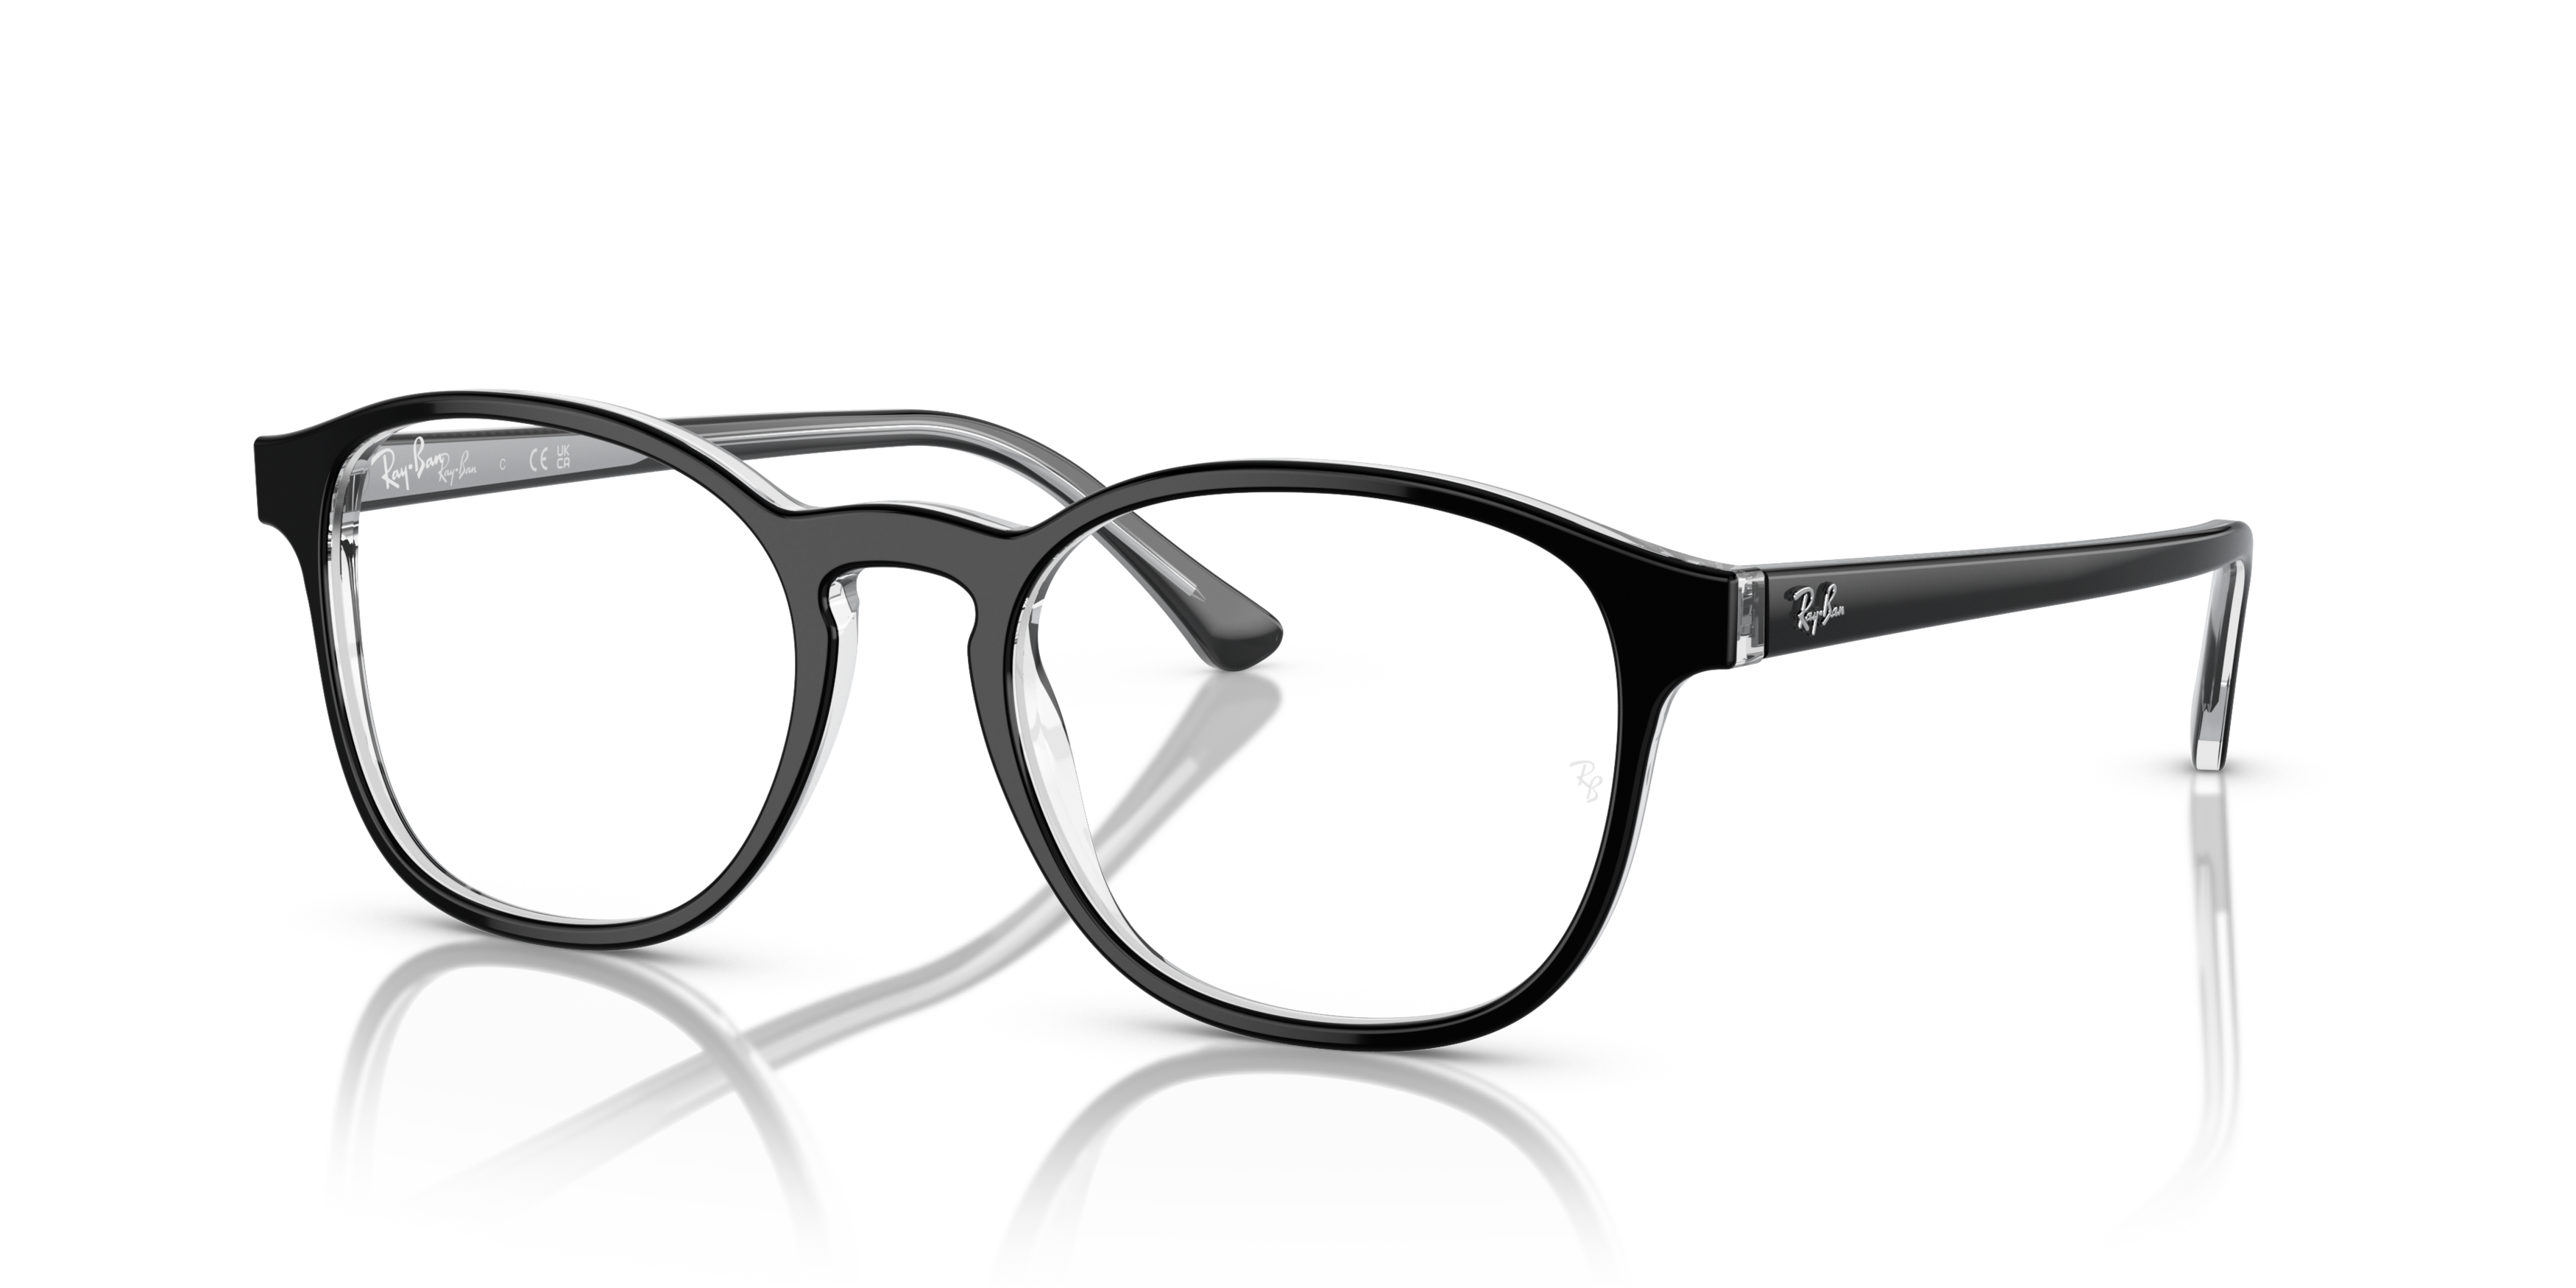 Angle_Left01 Ray-Ban RX 5417 Glasses Transparent / Black